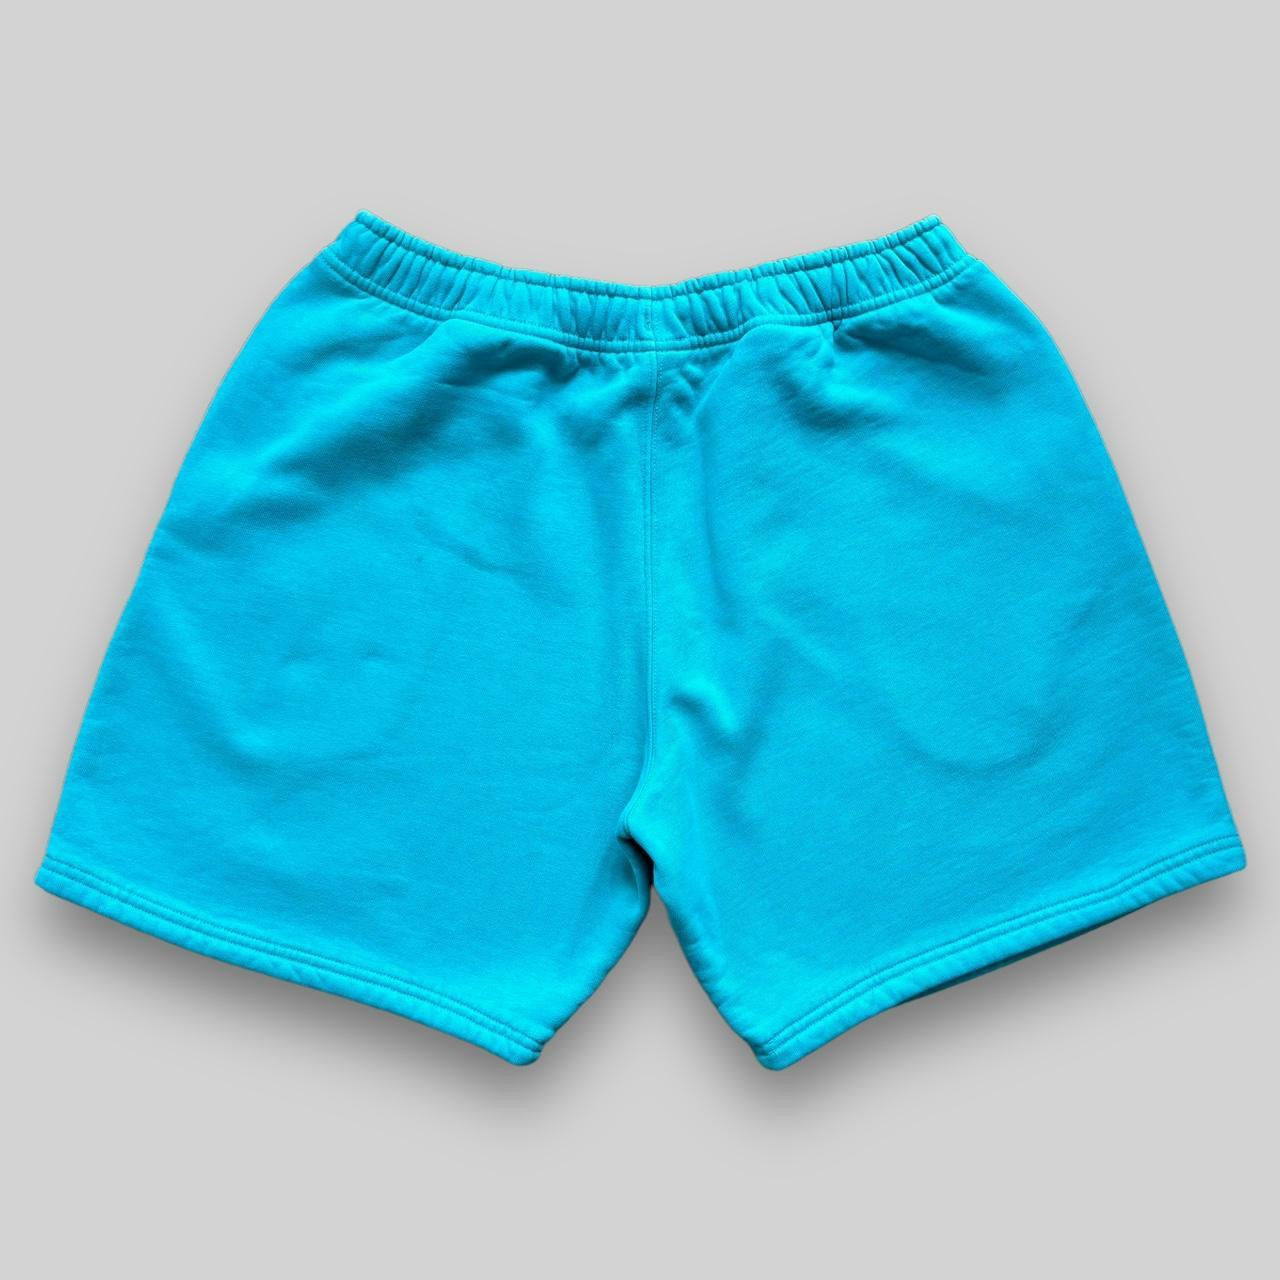 Nike NRG Single Swoosh Shorts (Medium)